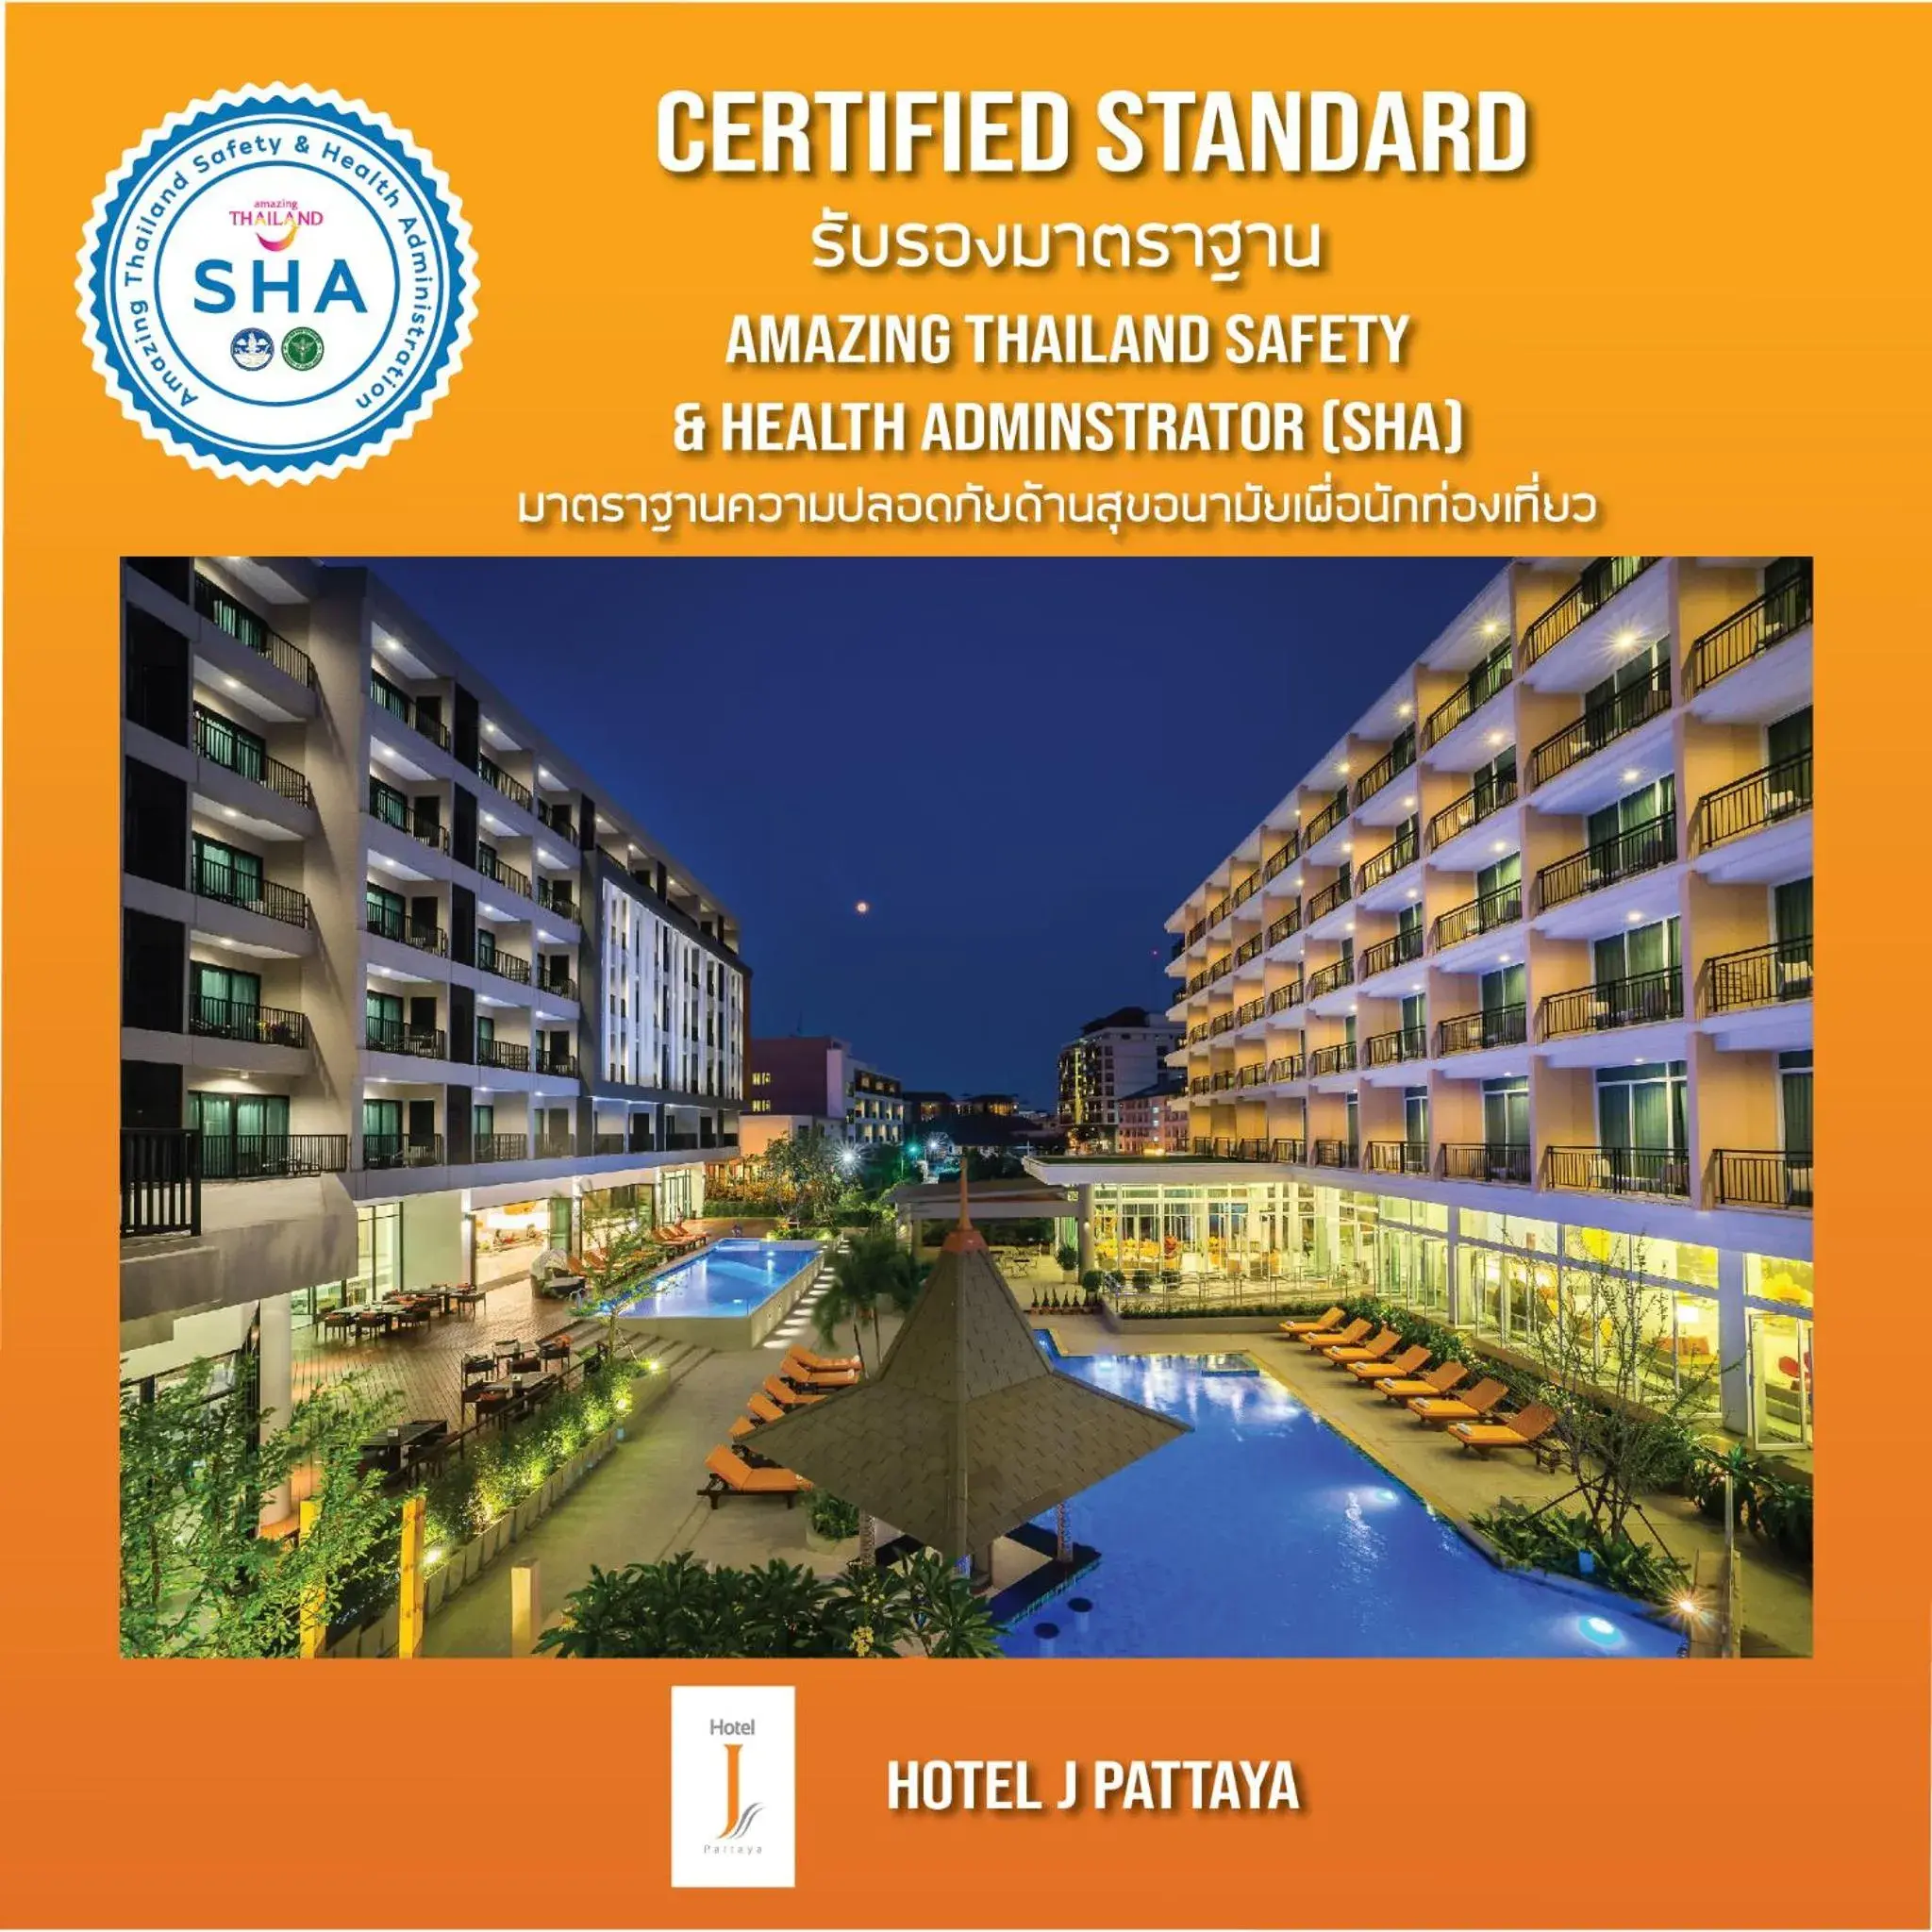 Logo/Certificate/Sign in Hotel J Pattaya